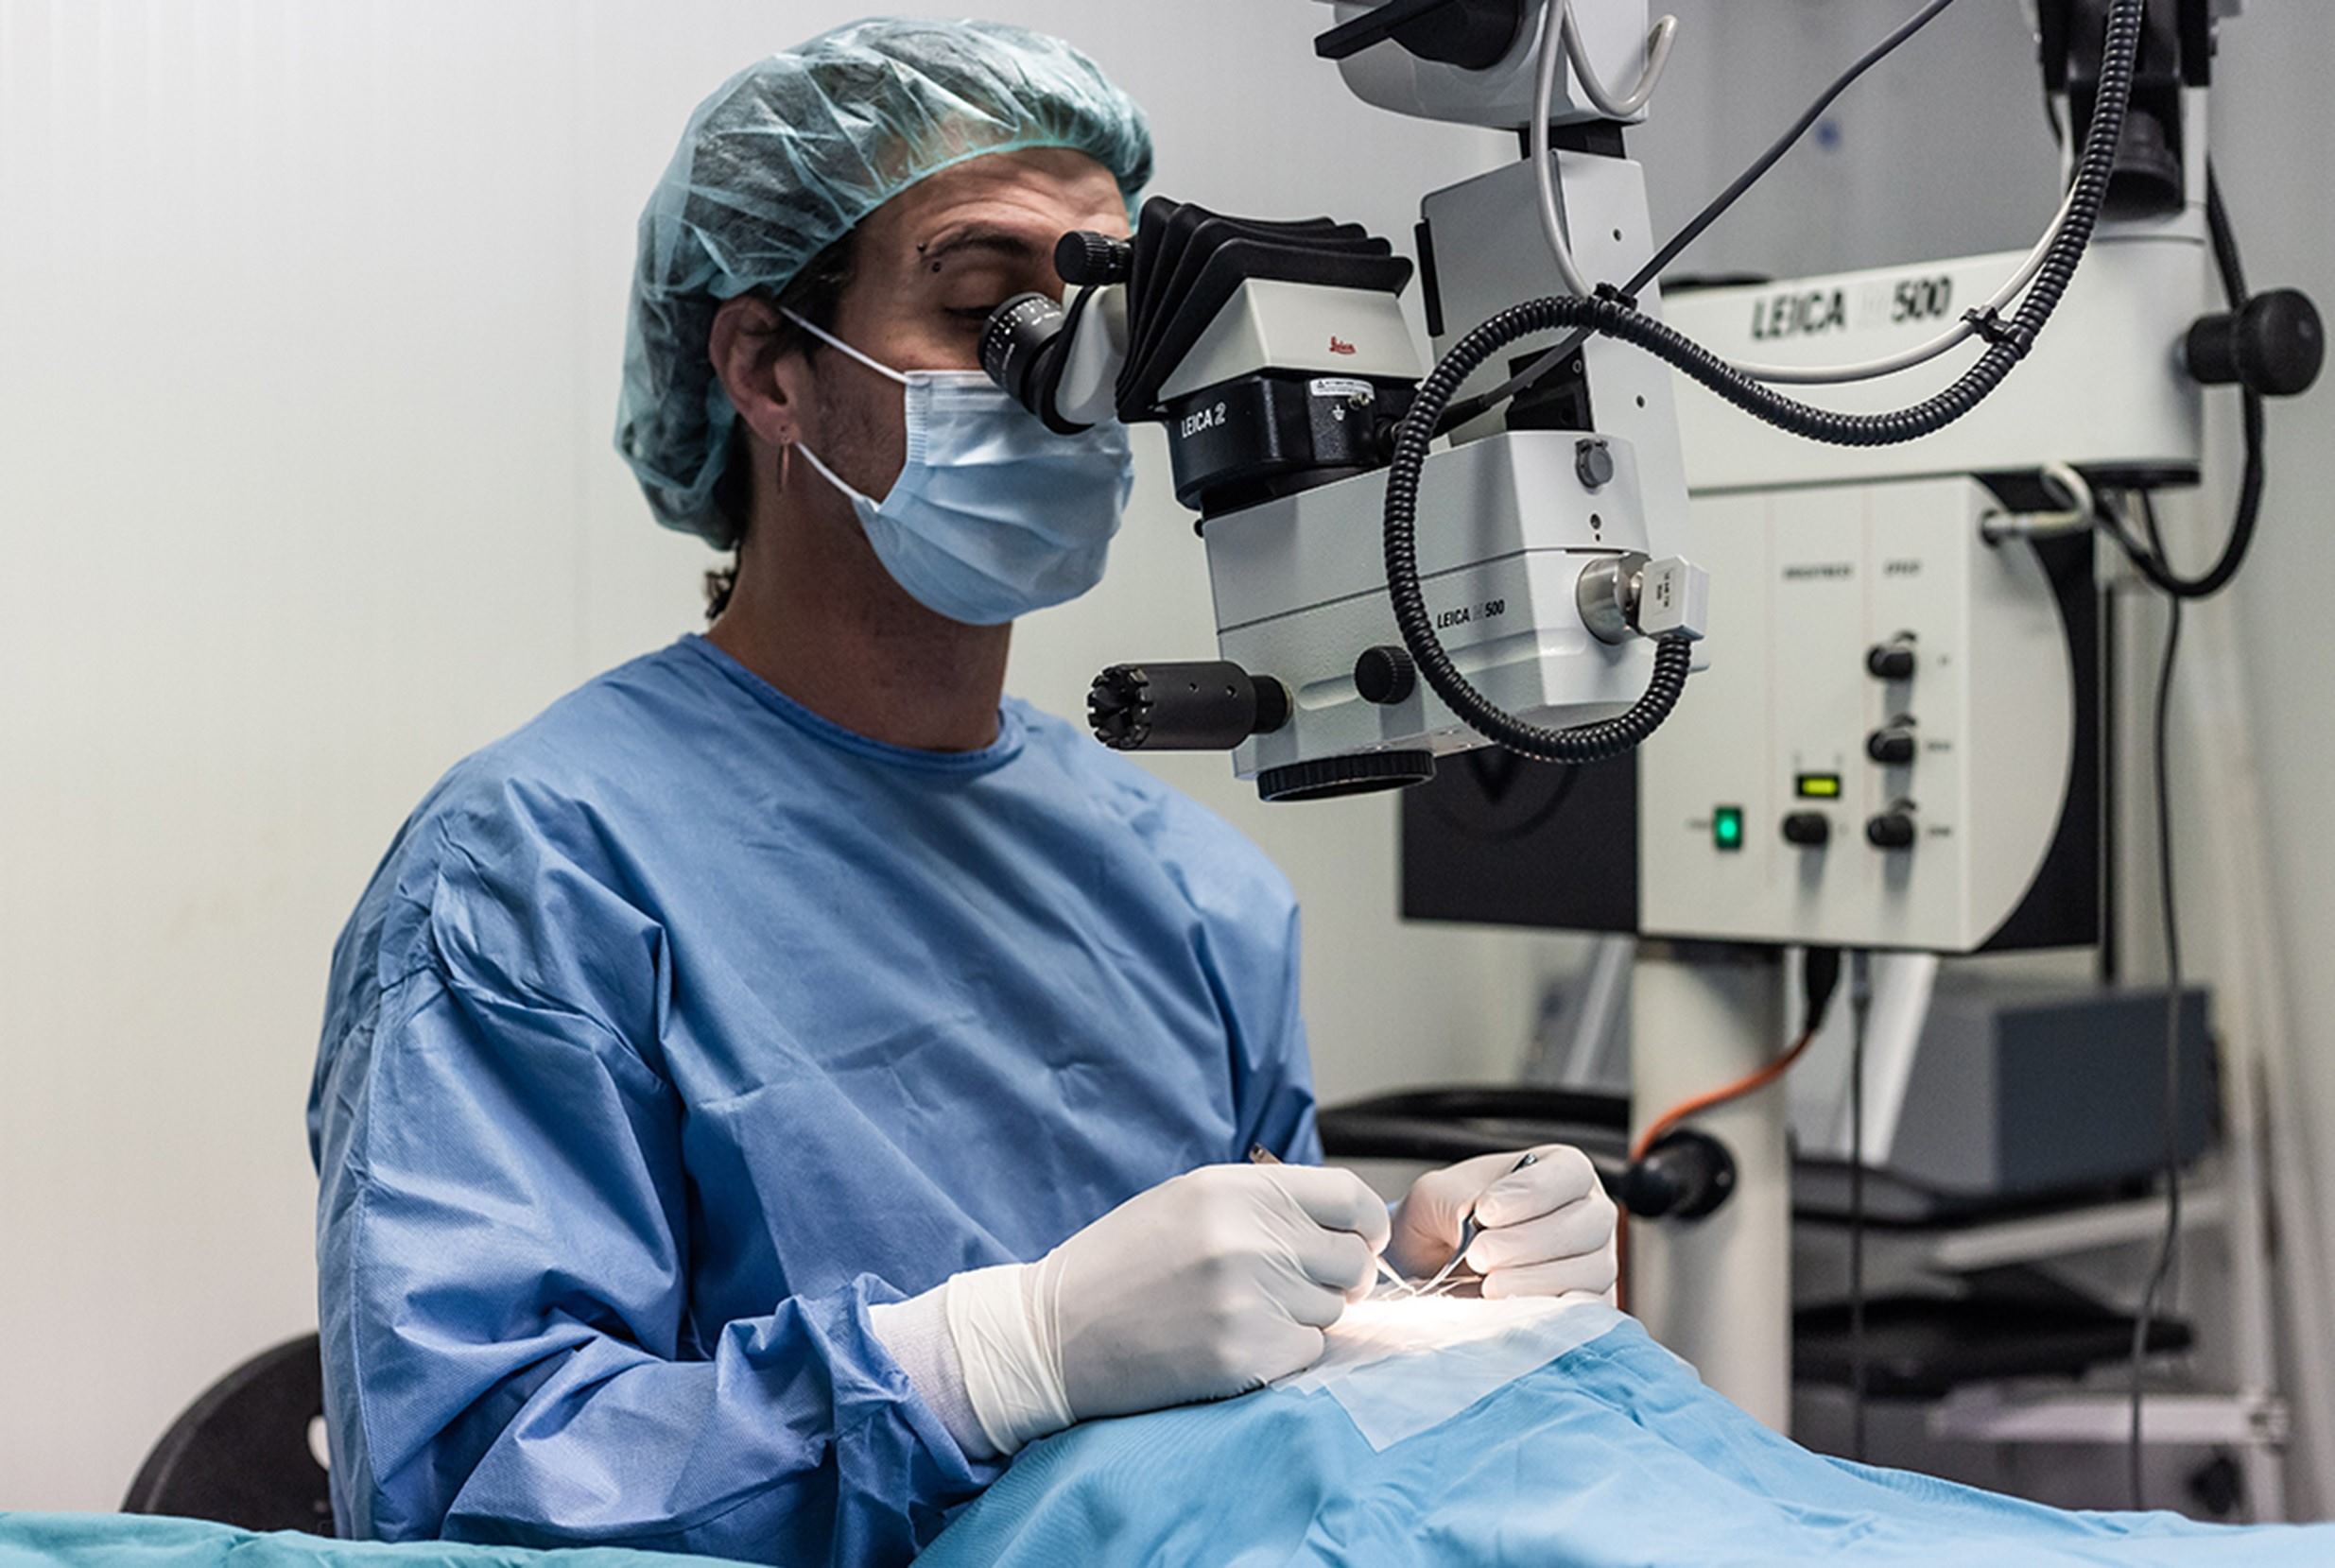 oftanimalia-servicios-cirugia-intraocular